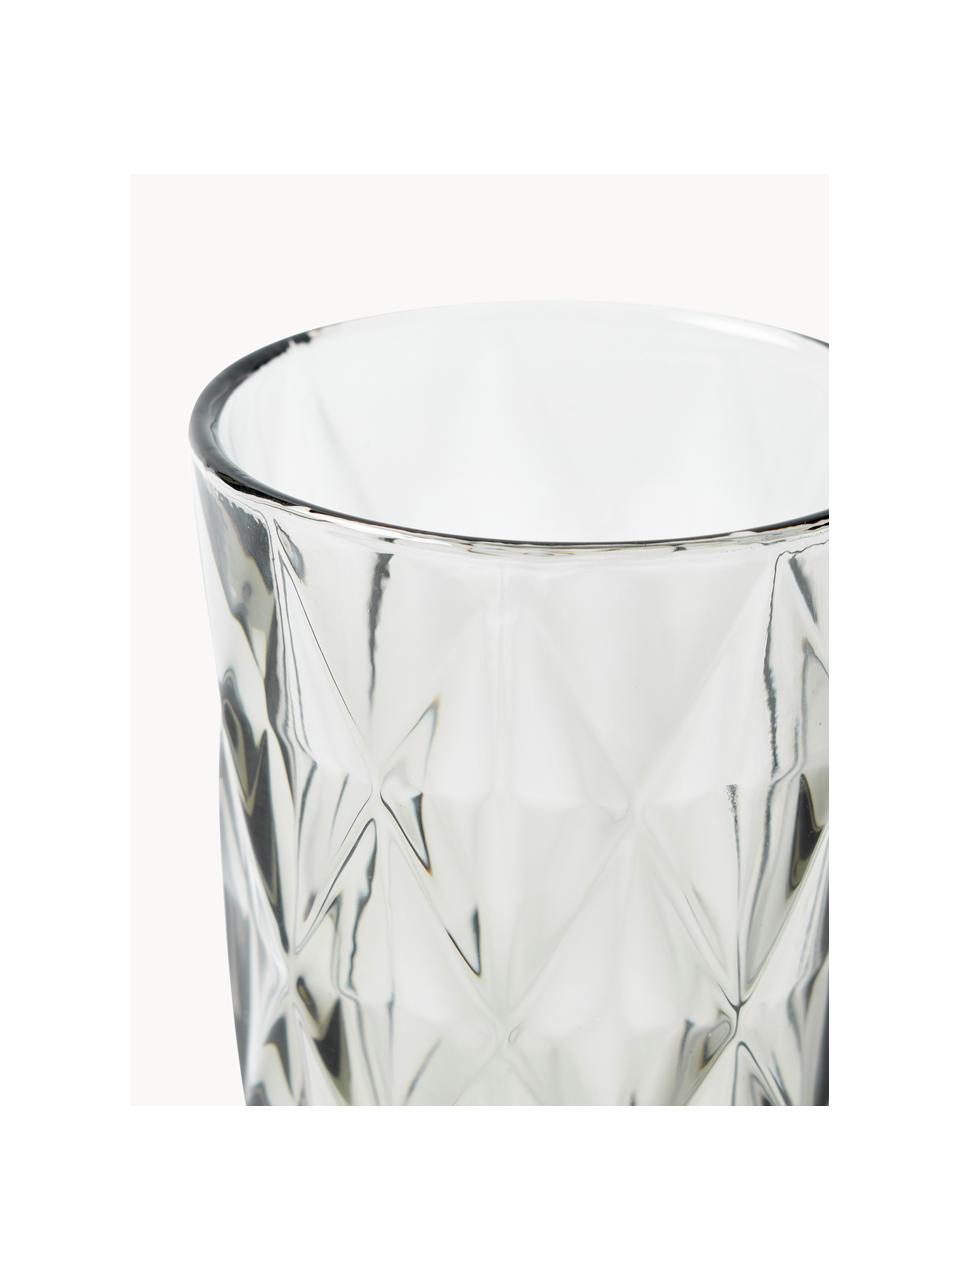 Longdrinkgläser Colorado mit Strukturmuster, 4 Stück, Glas, Grau, Ø 8 x H 13 cm, 310 ml